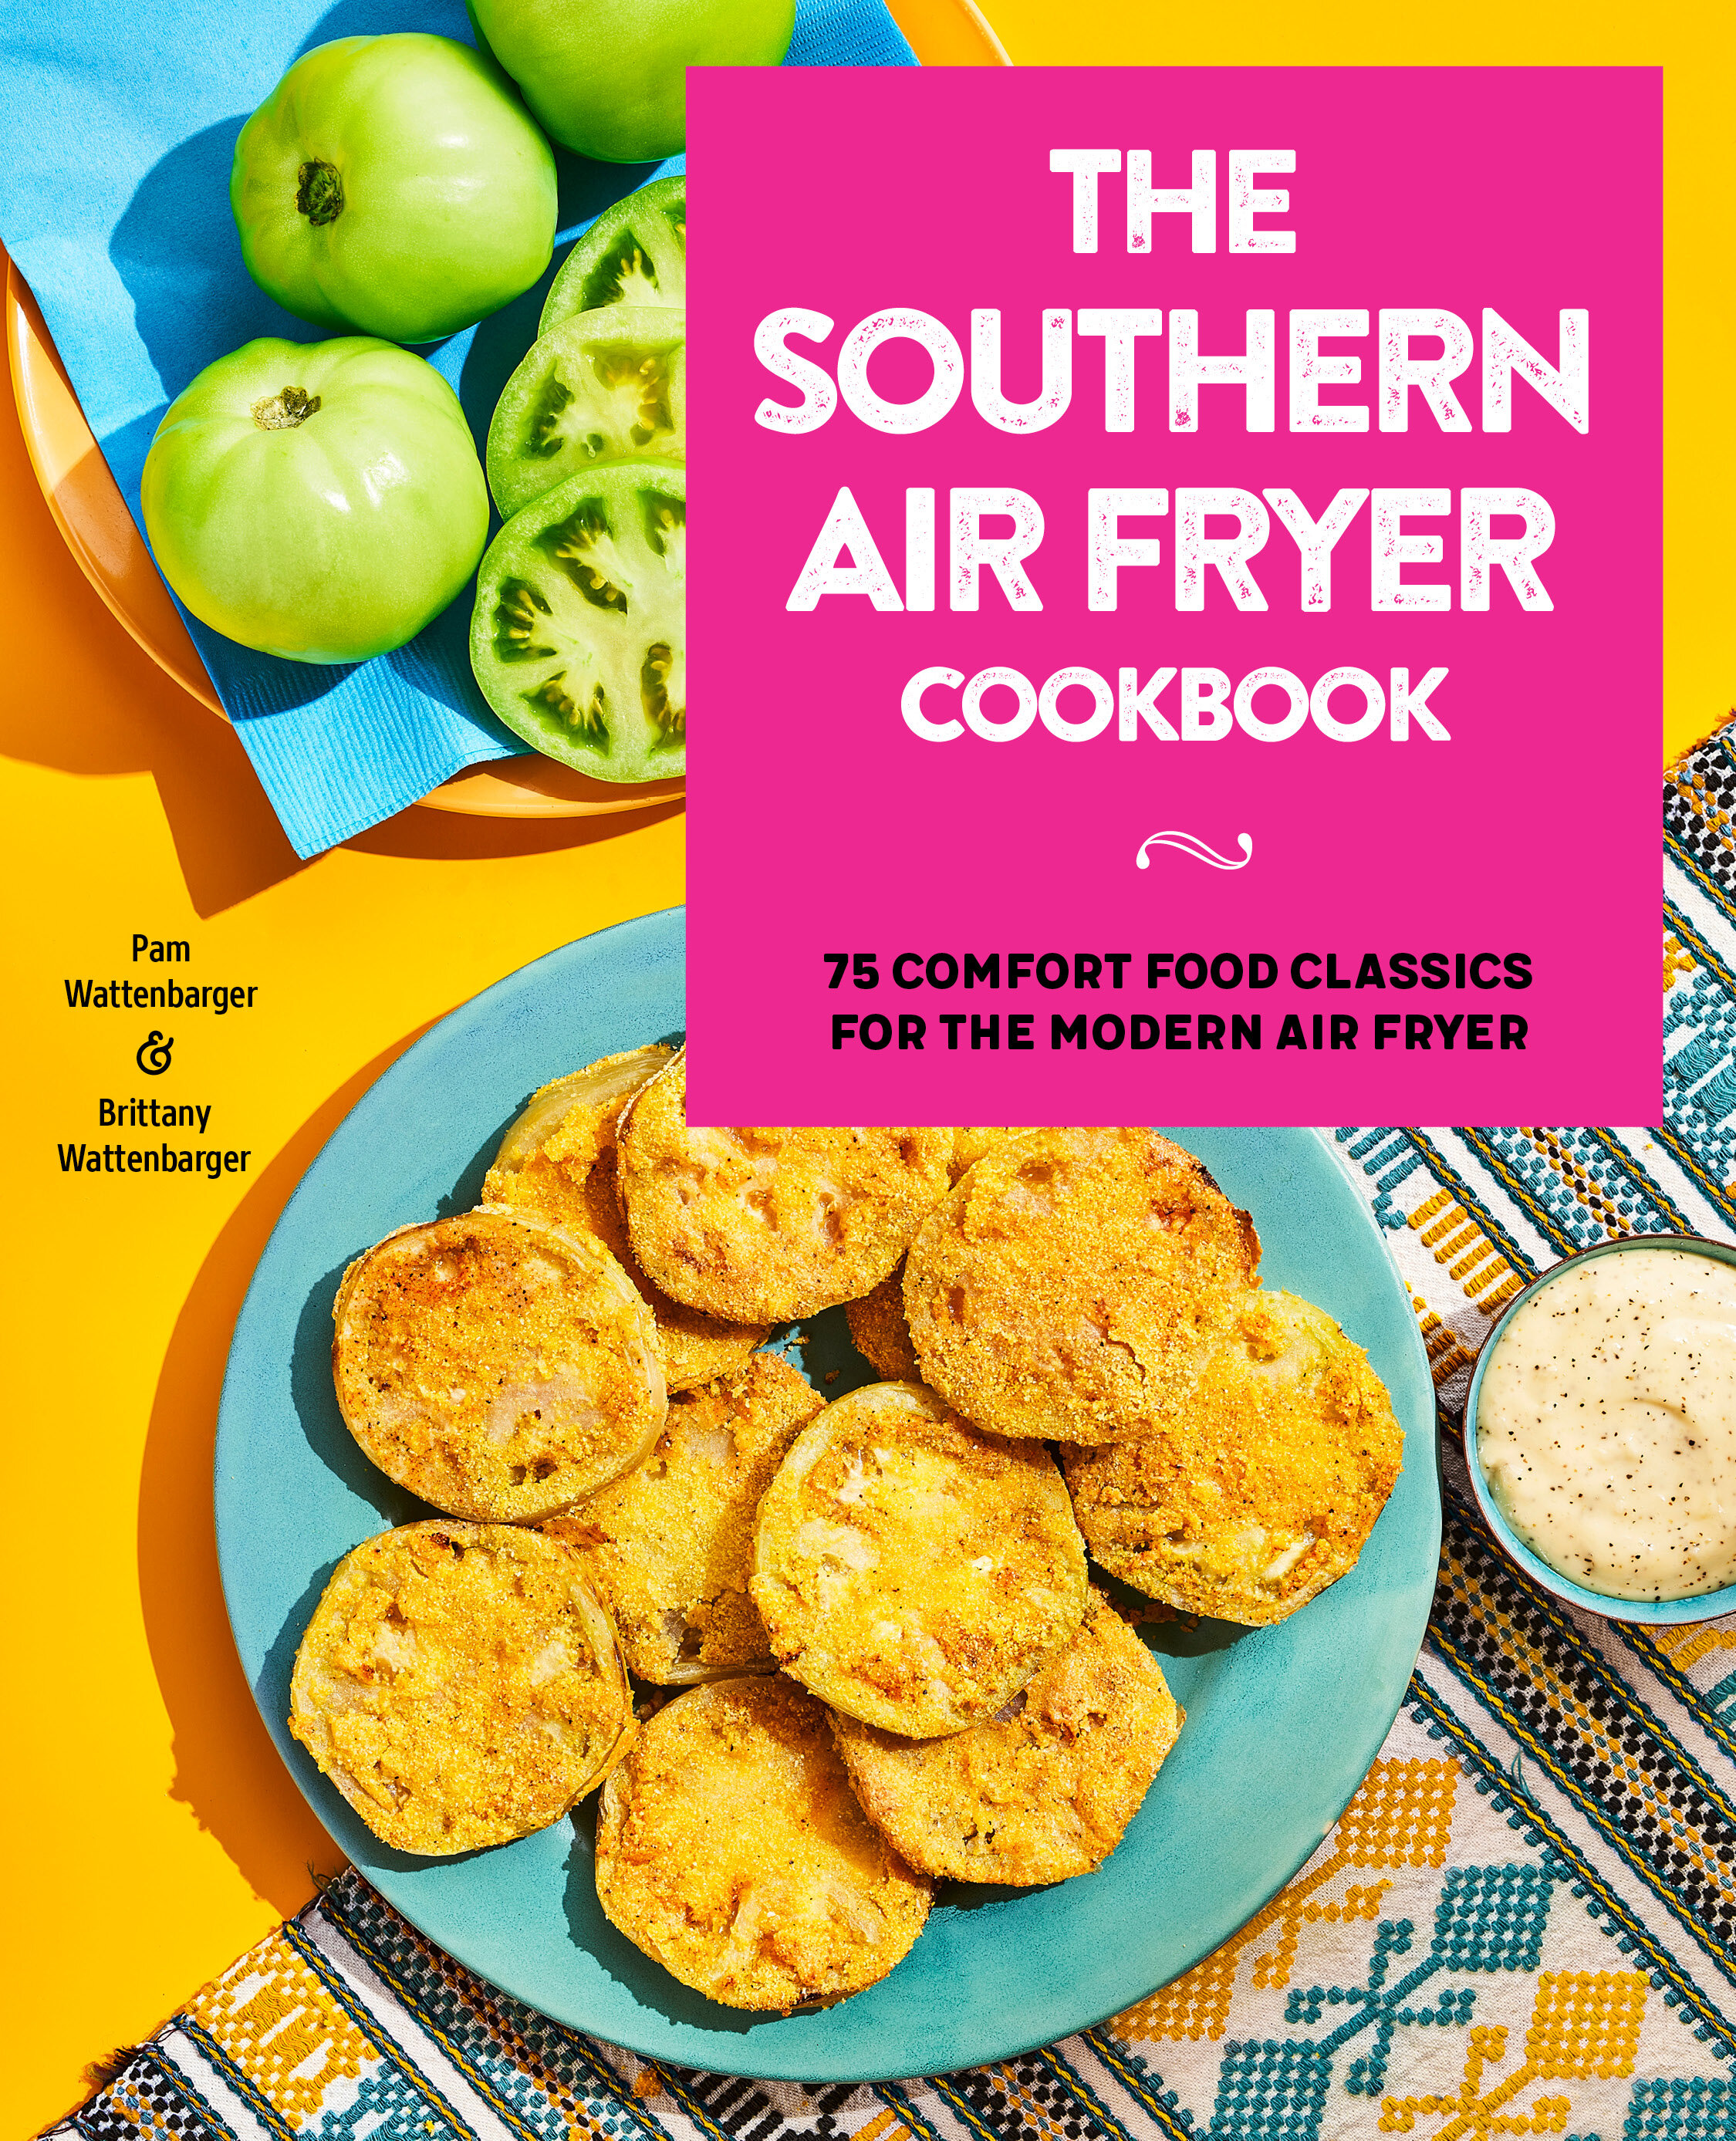 7Southern Air Fryer Cookbook.jpg